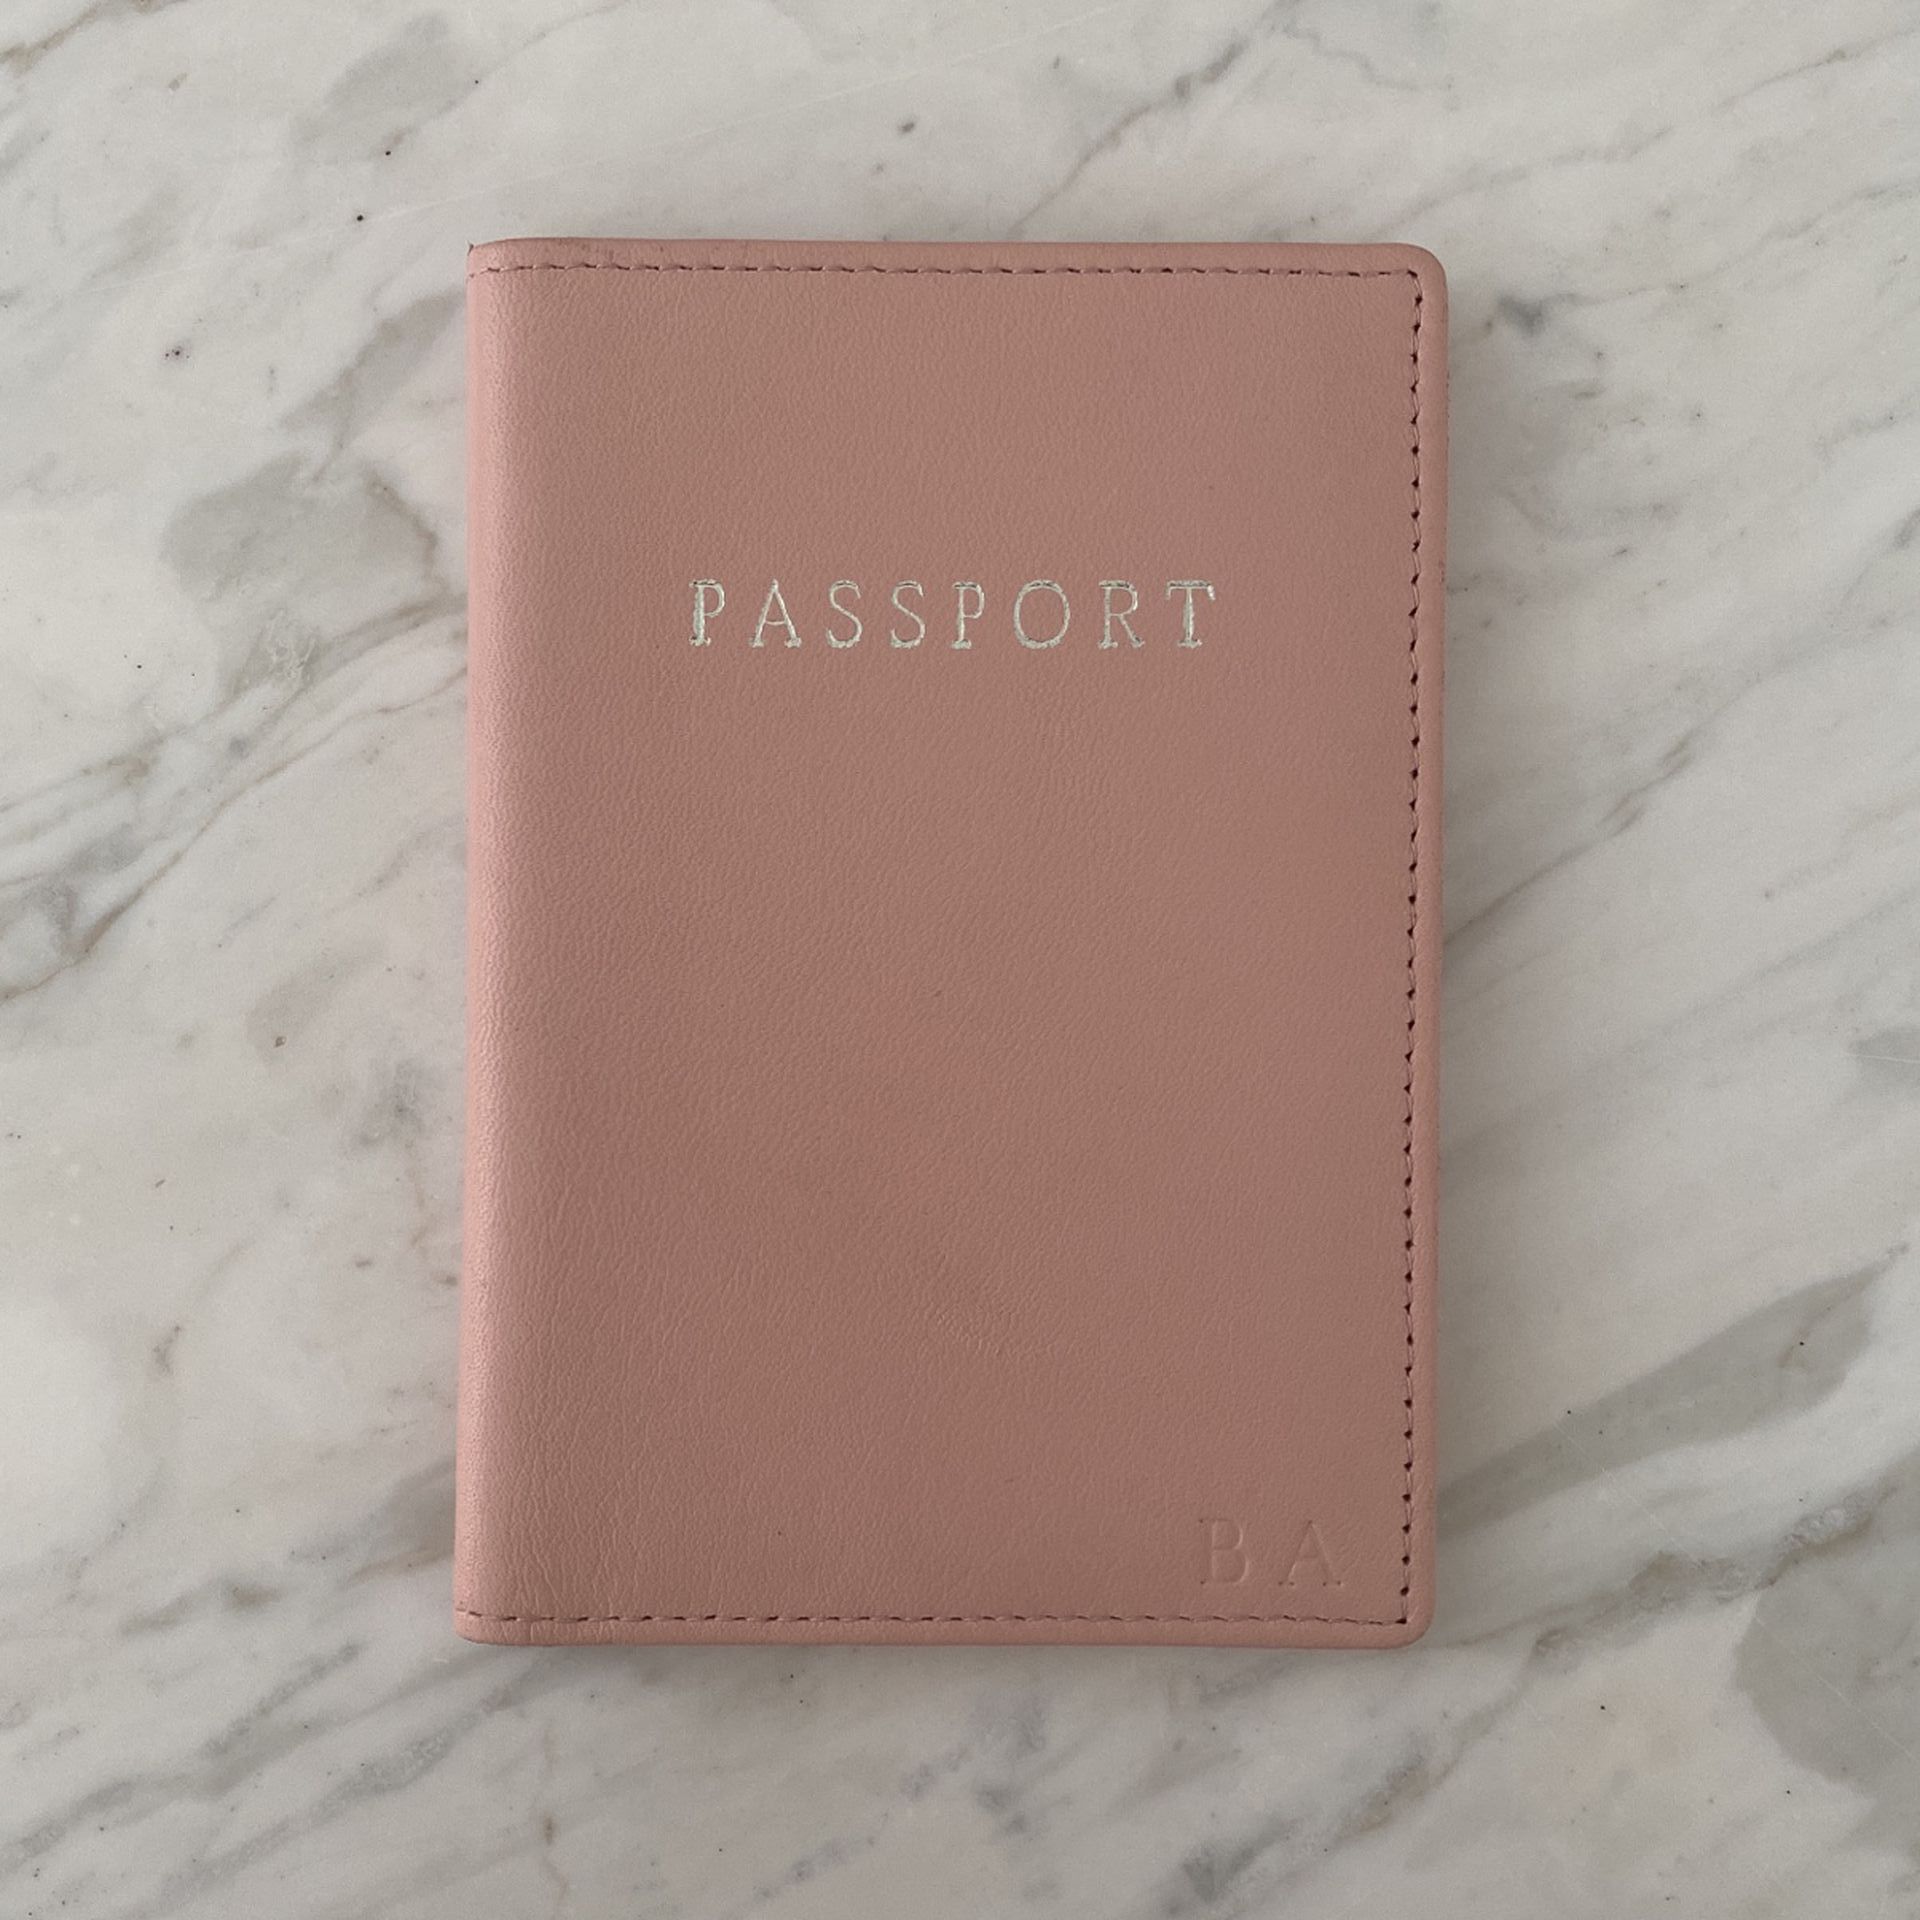 Designer Passport Holder for Sale in Central Islip, NY - OfferUp